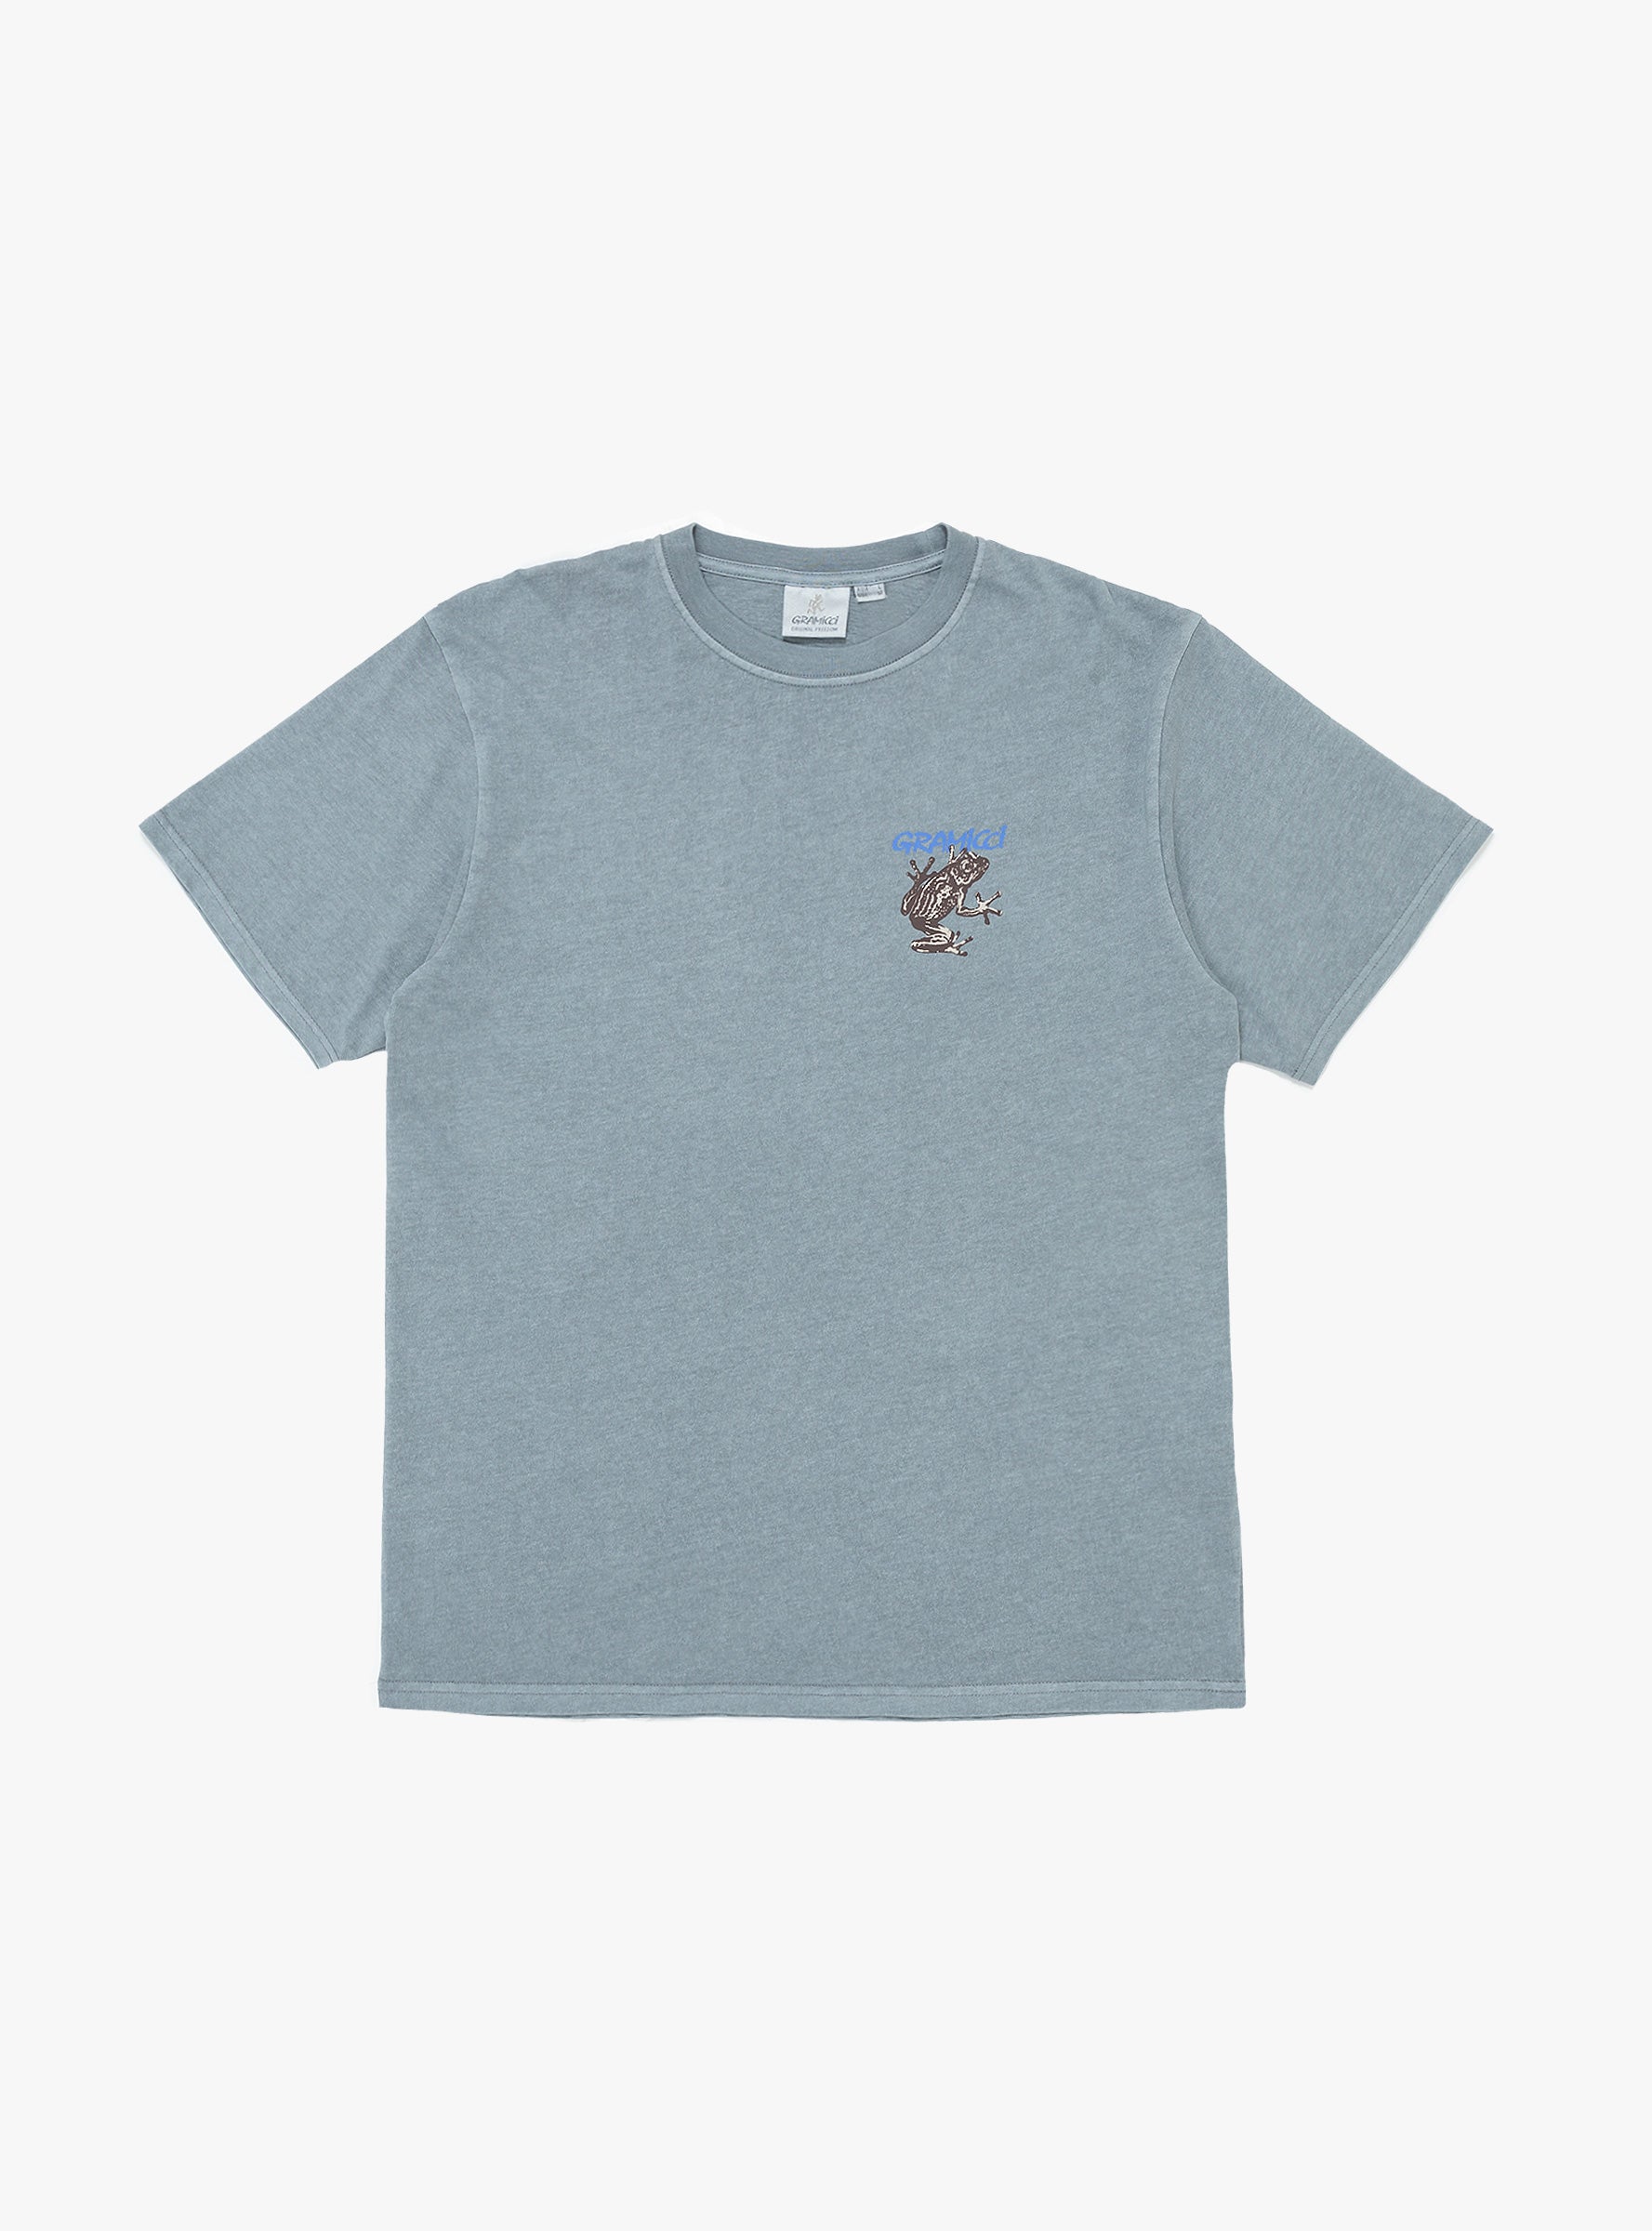 Gramicci Gramicci Sticky Frog T-shirt Slate Pigment - Size: Medium